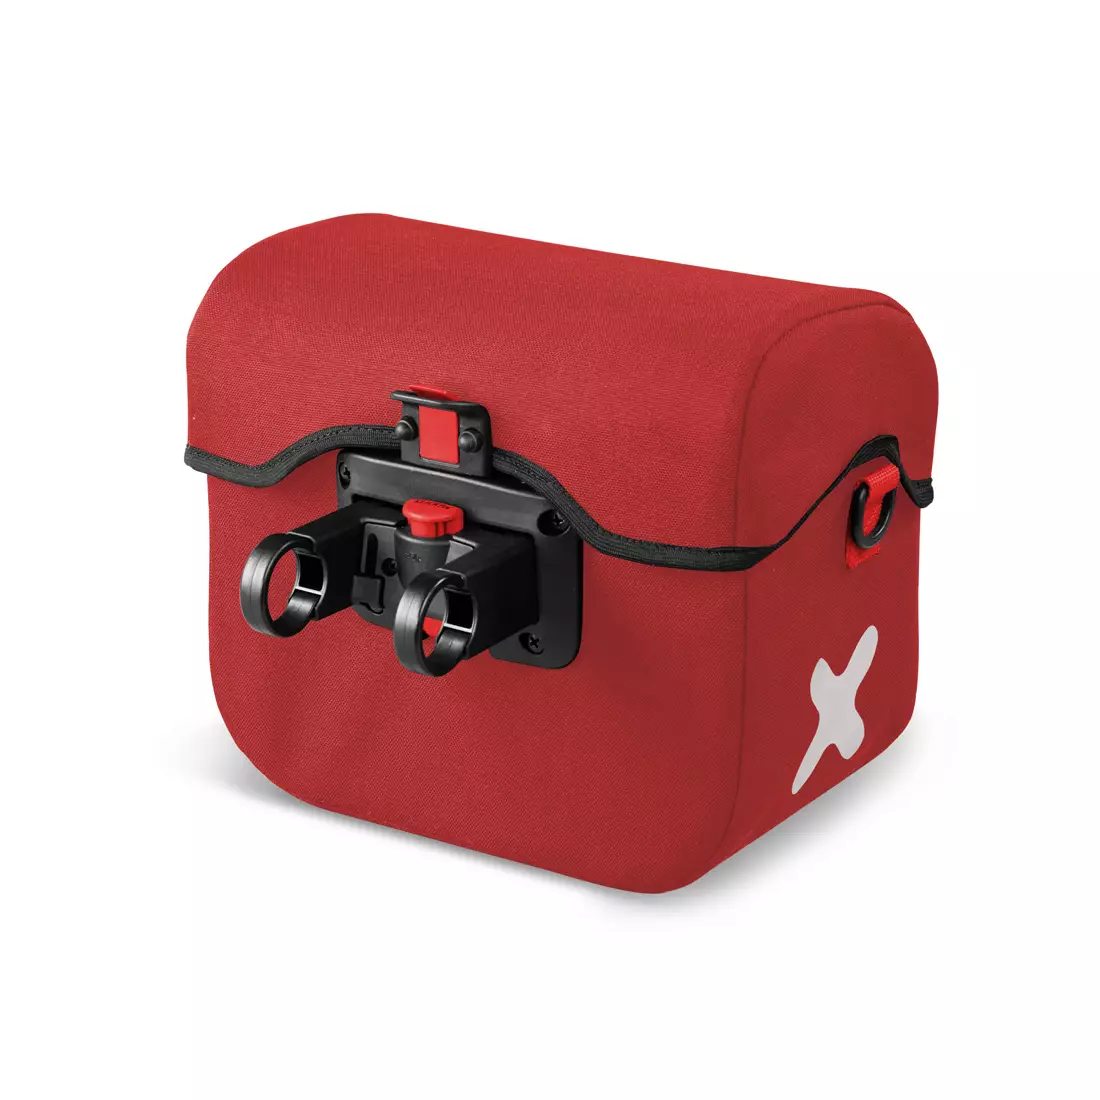 EXTRAWHEEL HANDY PREMIUM CORDURA XL bicycle handlebar bag, red 7,5 L